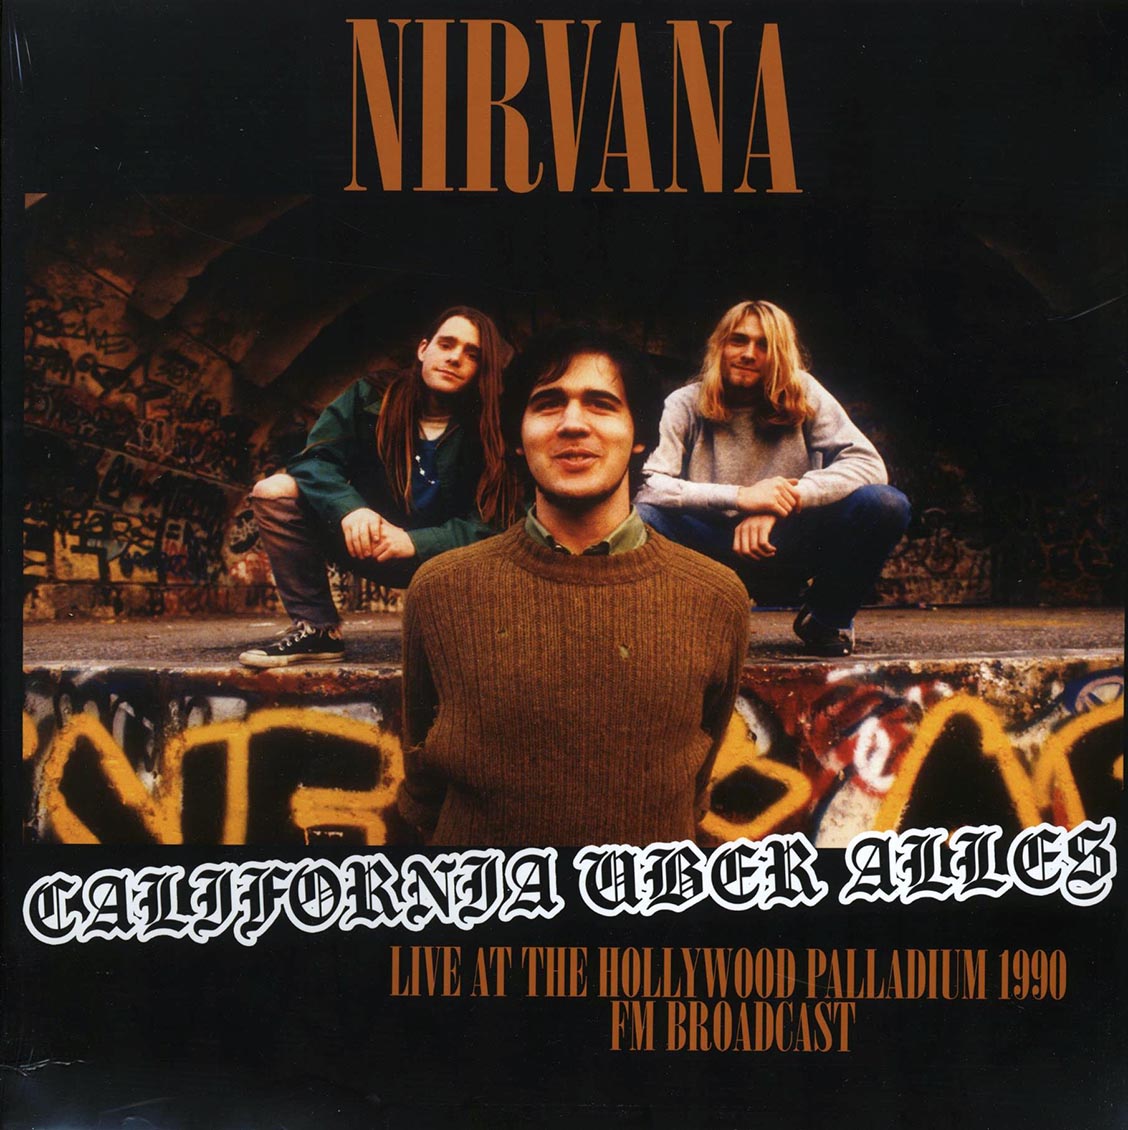 Nirvana - California Uber Alles: Live At The Hollywood Palladium 1990 FM Broadcast (ltd. 500 copies made) - Vinyl LP